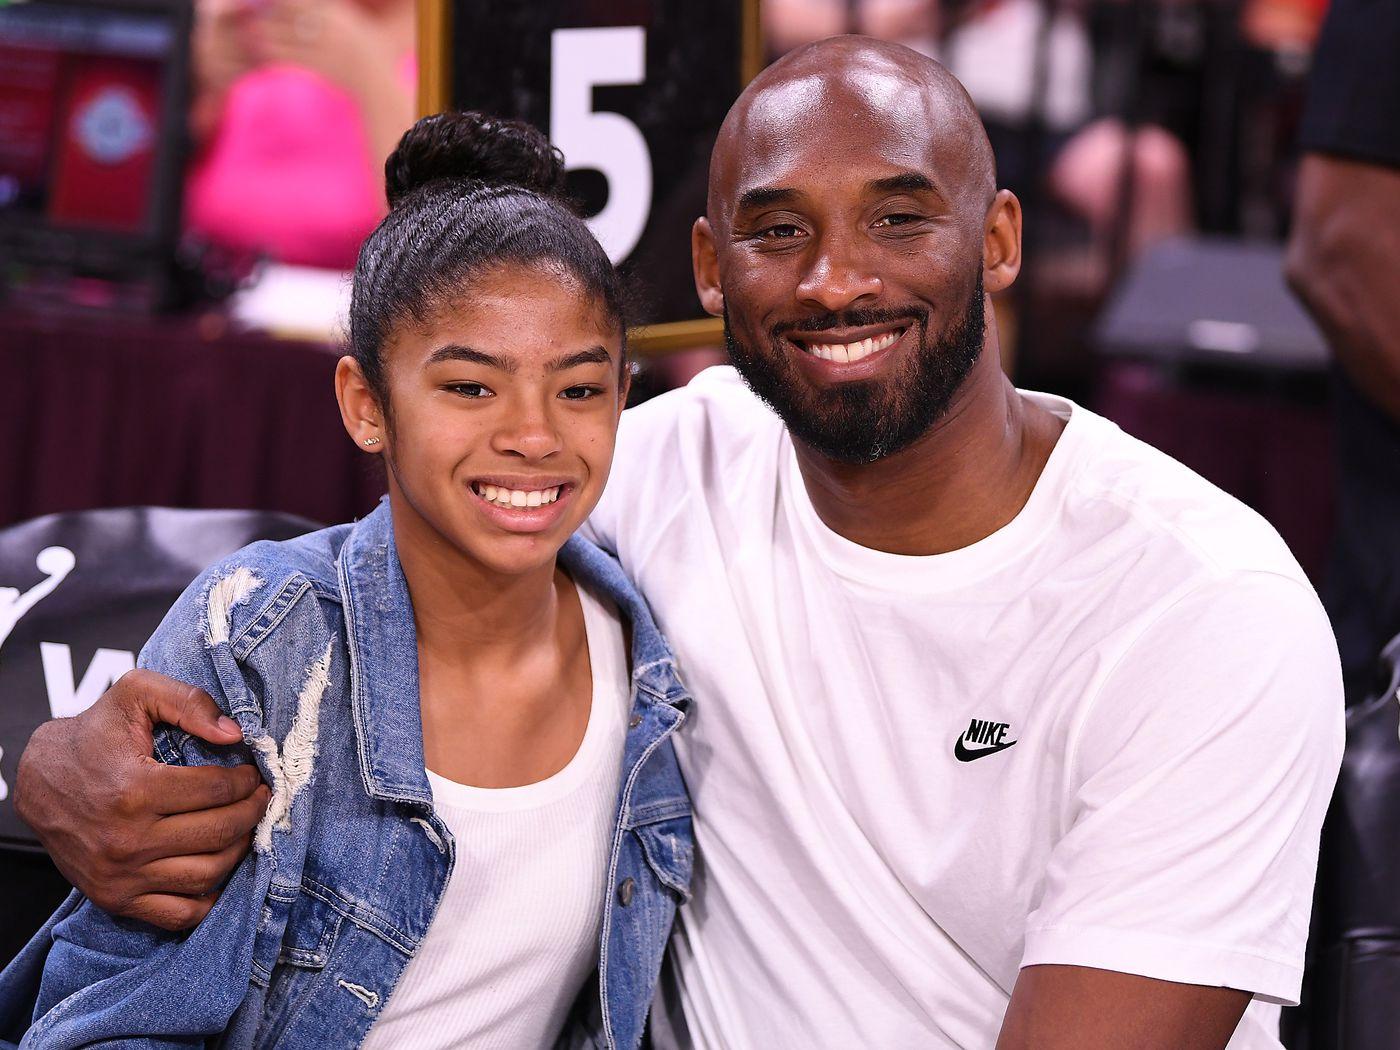 Oklahoma State Twitter mourns Kobe Bryant